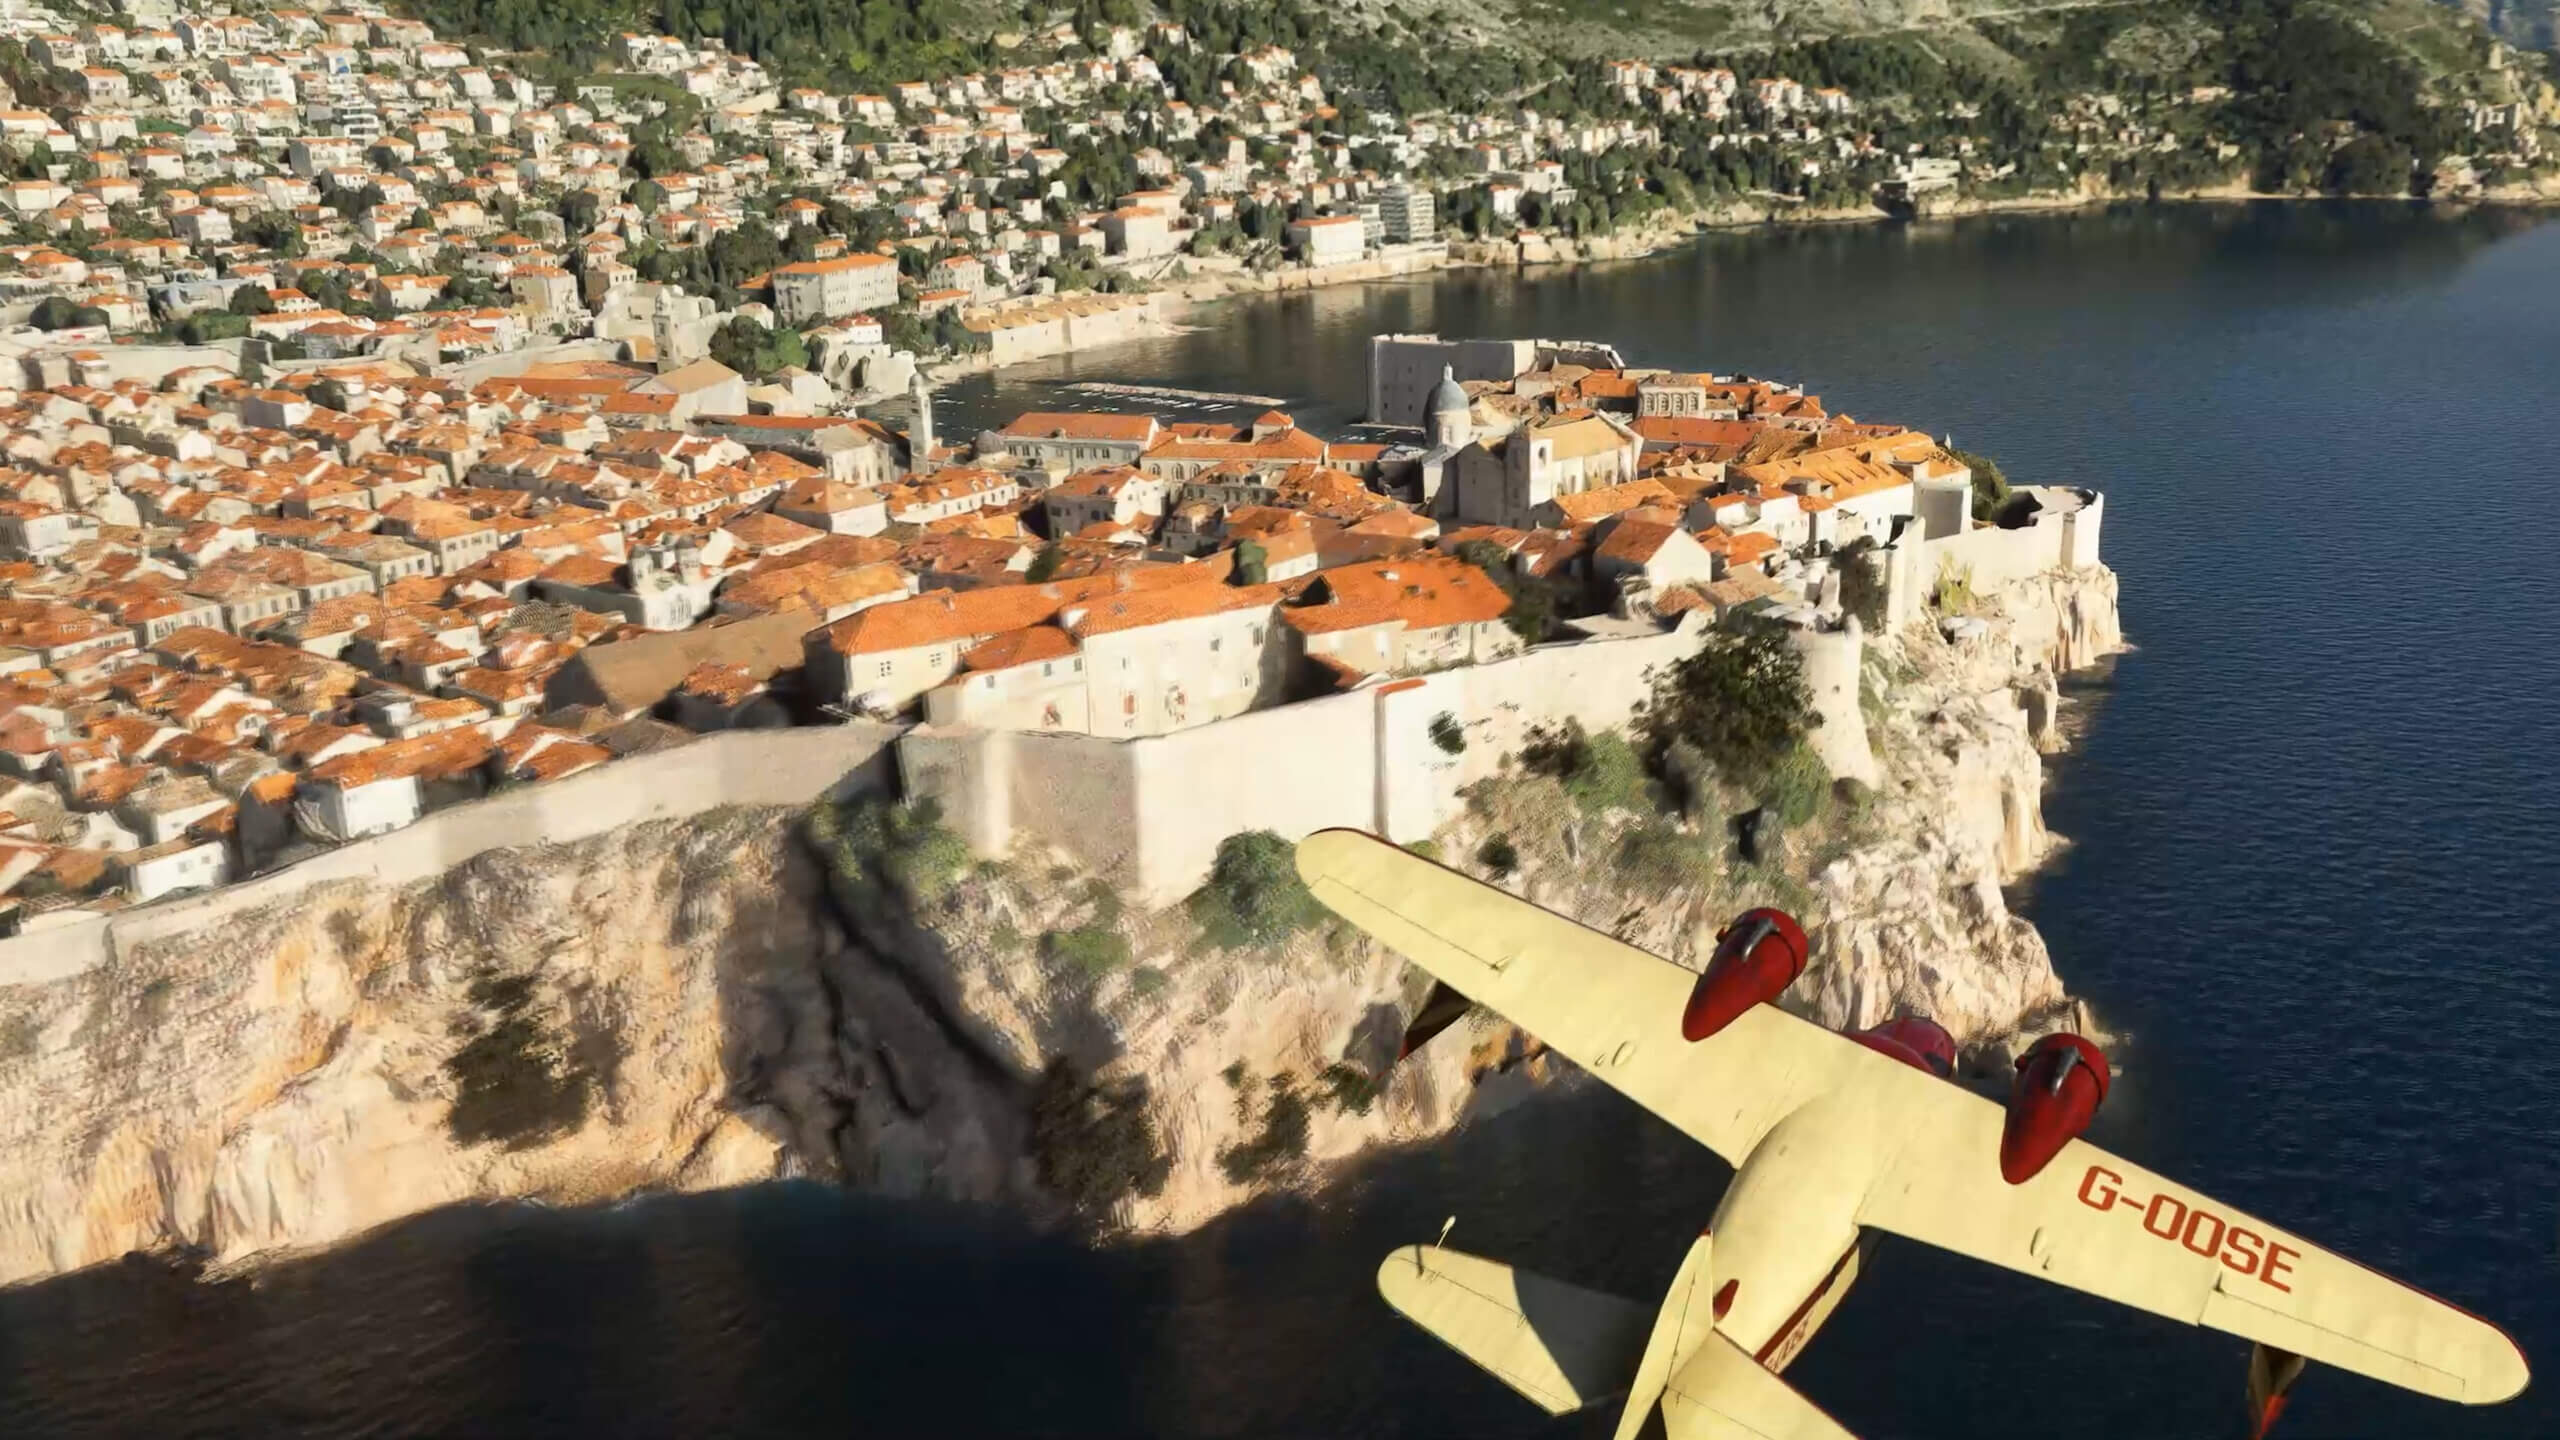 A Grumman Goose flies over the city of Dubrovnik